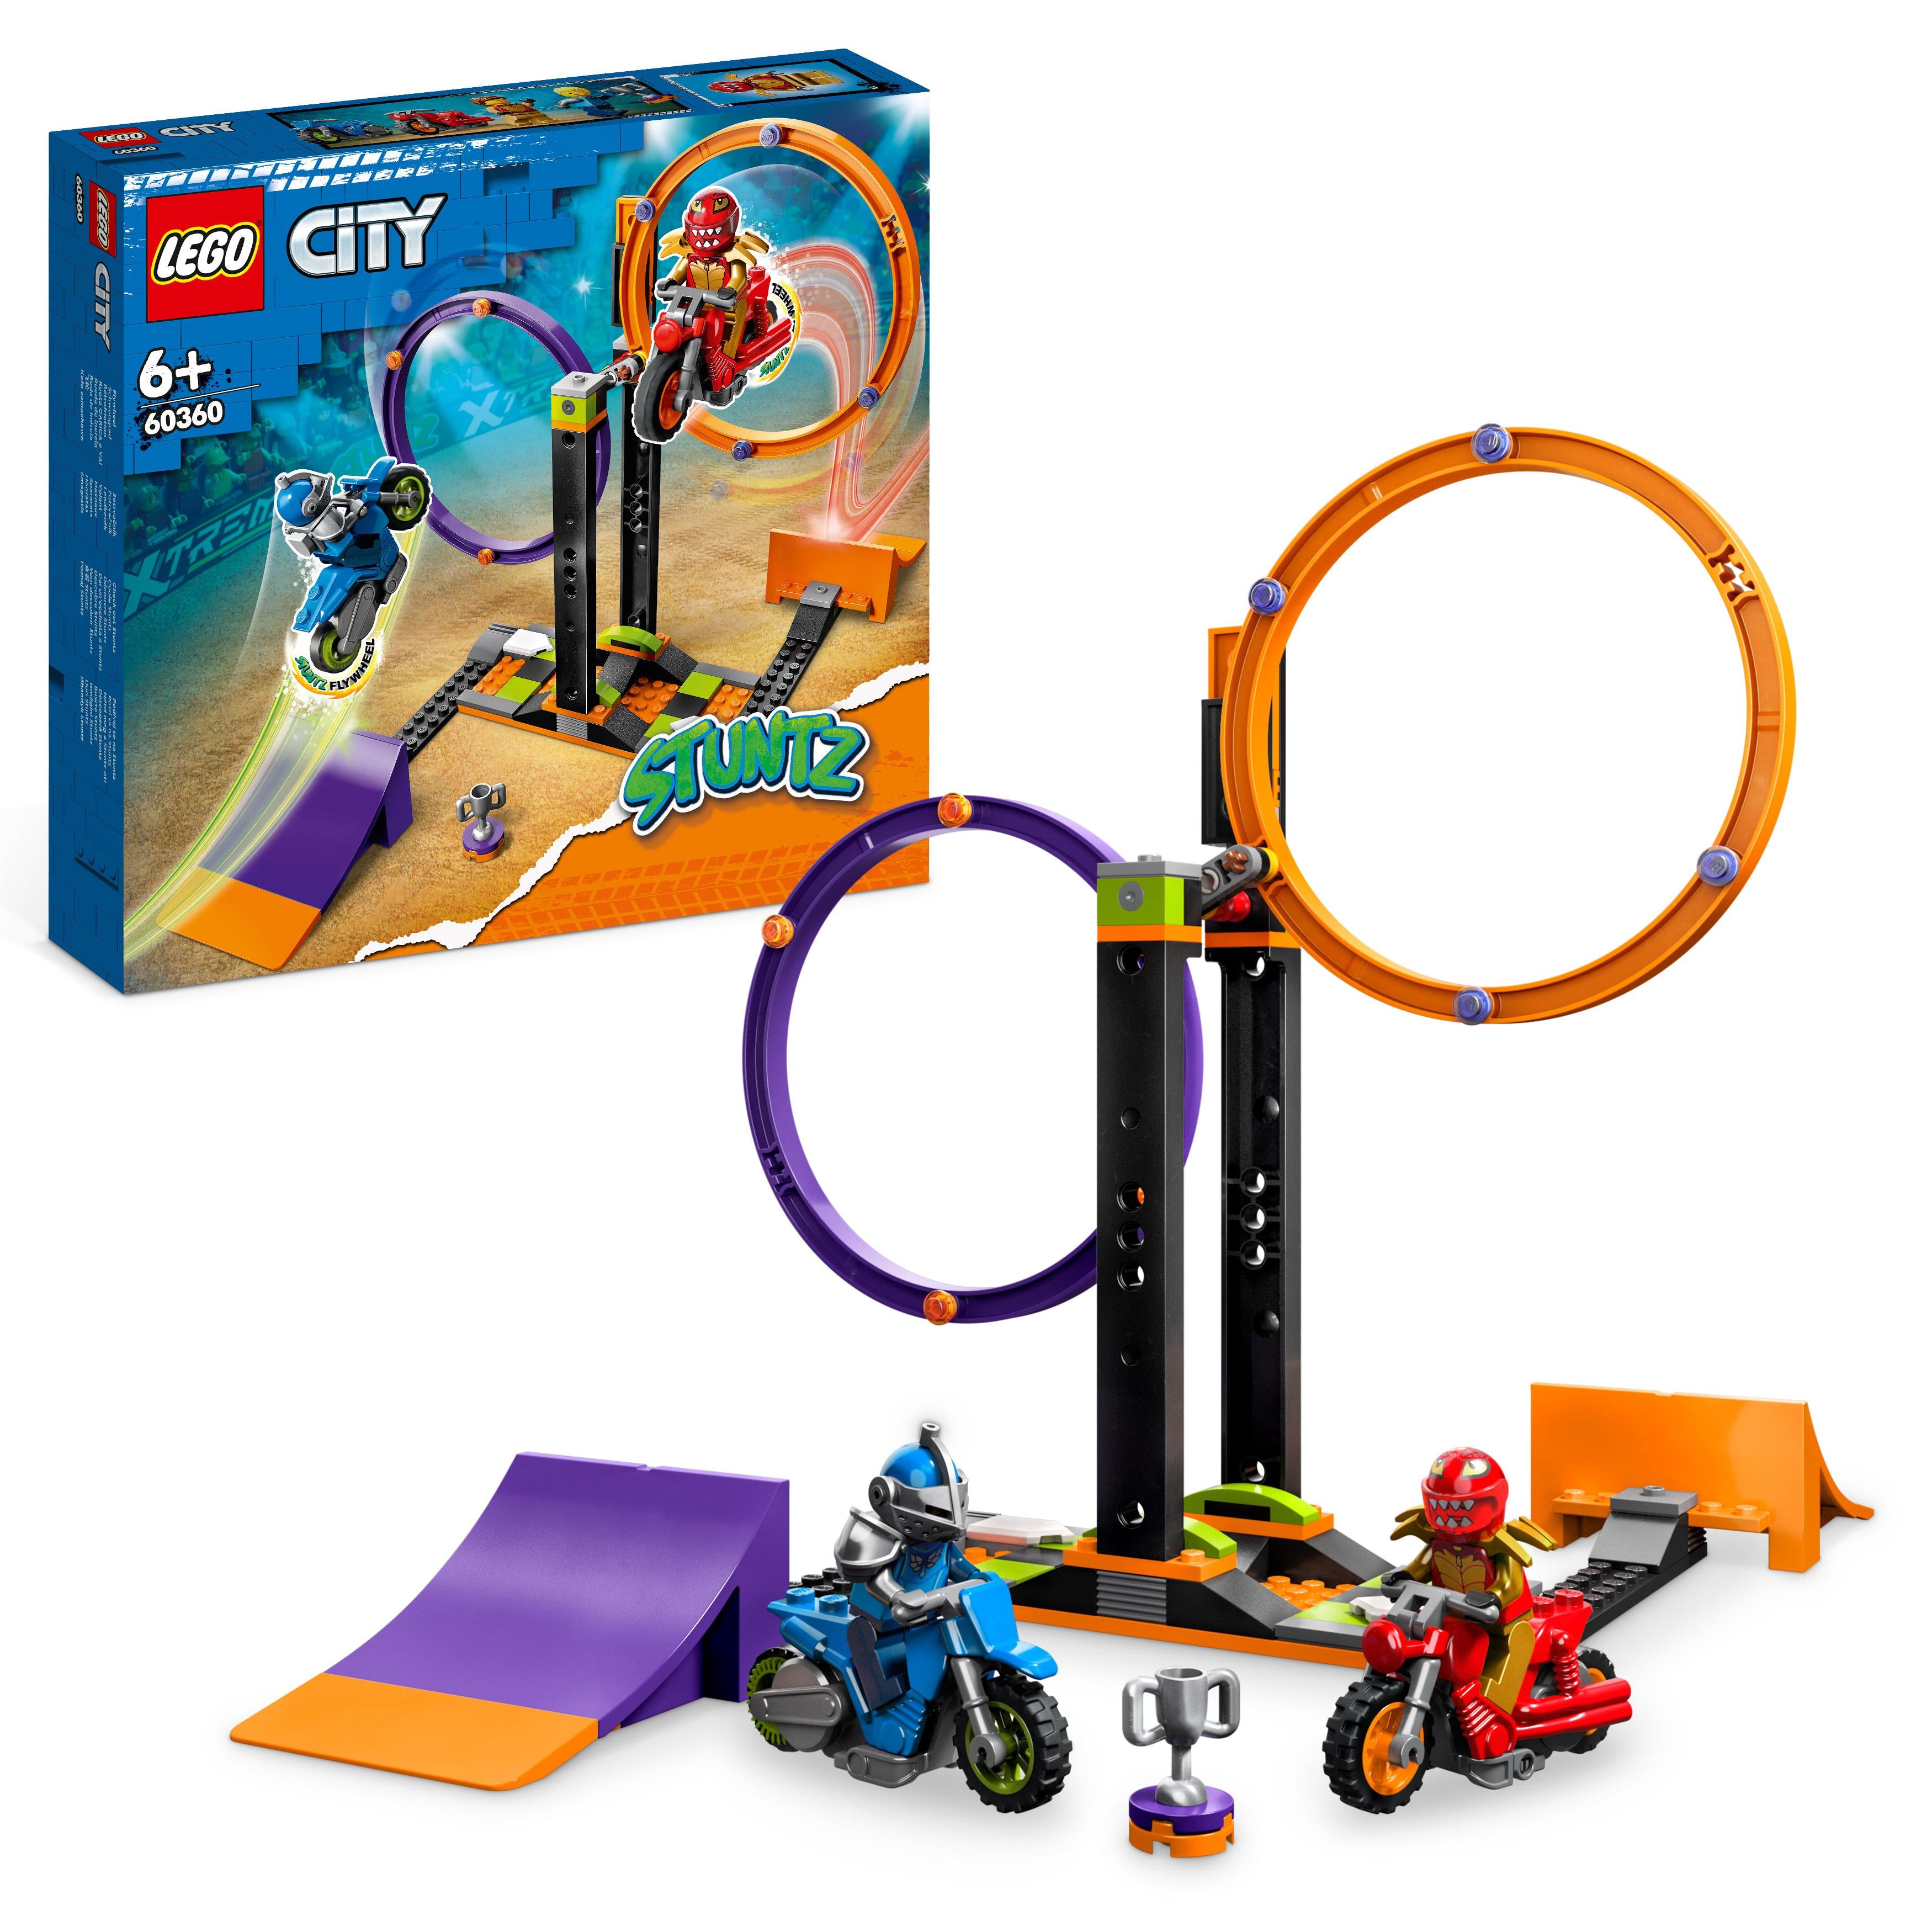 LEGO City Stuntz The Shark Attack Stunt Challenge Adventure Series Toy with  Flywheel Powered Stunt Bike & Racer Minifigure, Toys for Kids Years Old